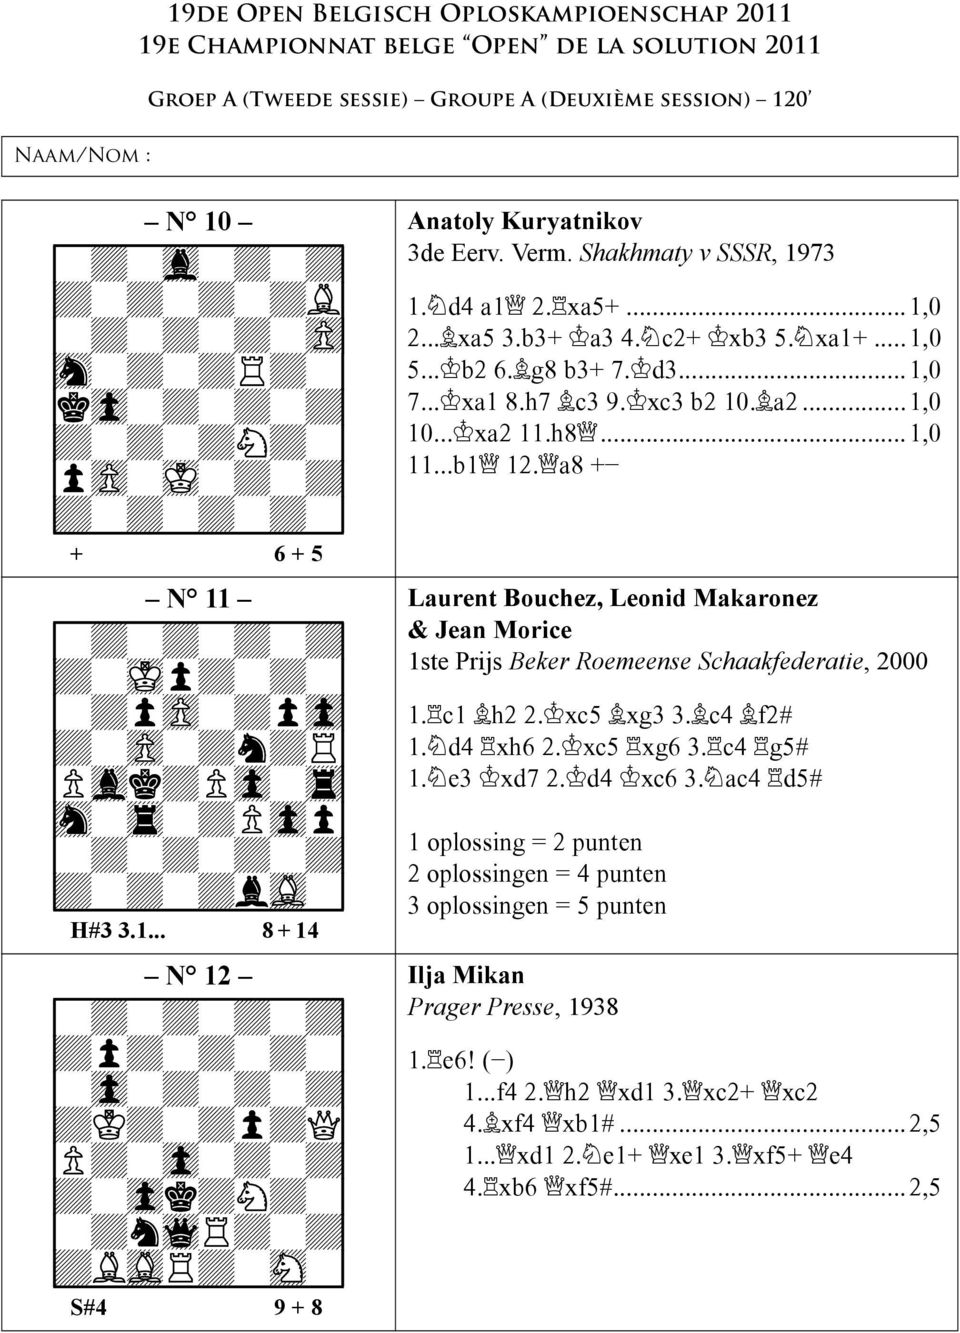 Shakhmaty v SSSR, 1973 1. d4 a1 2. xa5+...1,0 2... xa5 3.b3+ a3 4. c2+ xb3 5. xa1+...1,0 5... b2 6. g8 b3+ 7. d3...1,0 7... xa1 8.h7 c3 9. xc3 b2 10. a2...1,0 10... xa2 11.h8...1,0 11...b1 12.